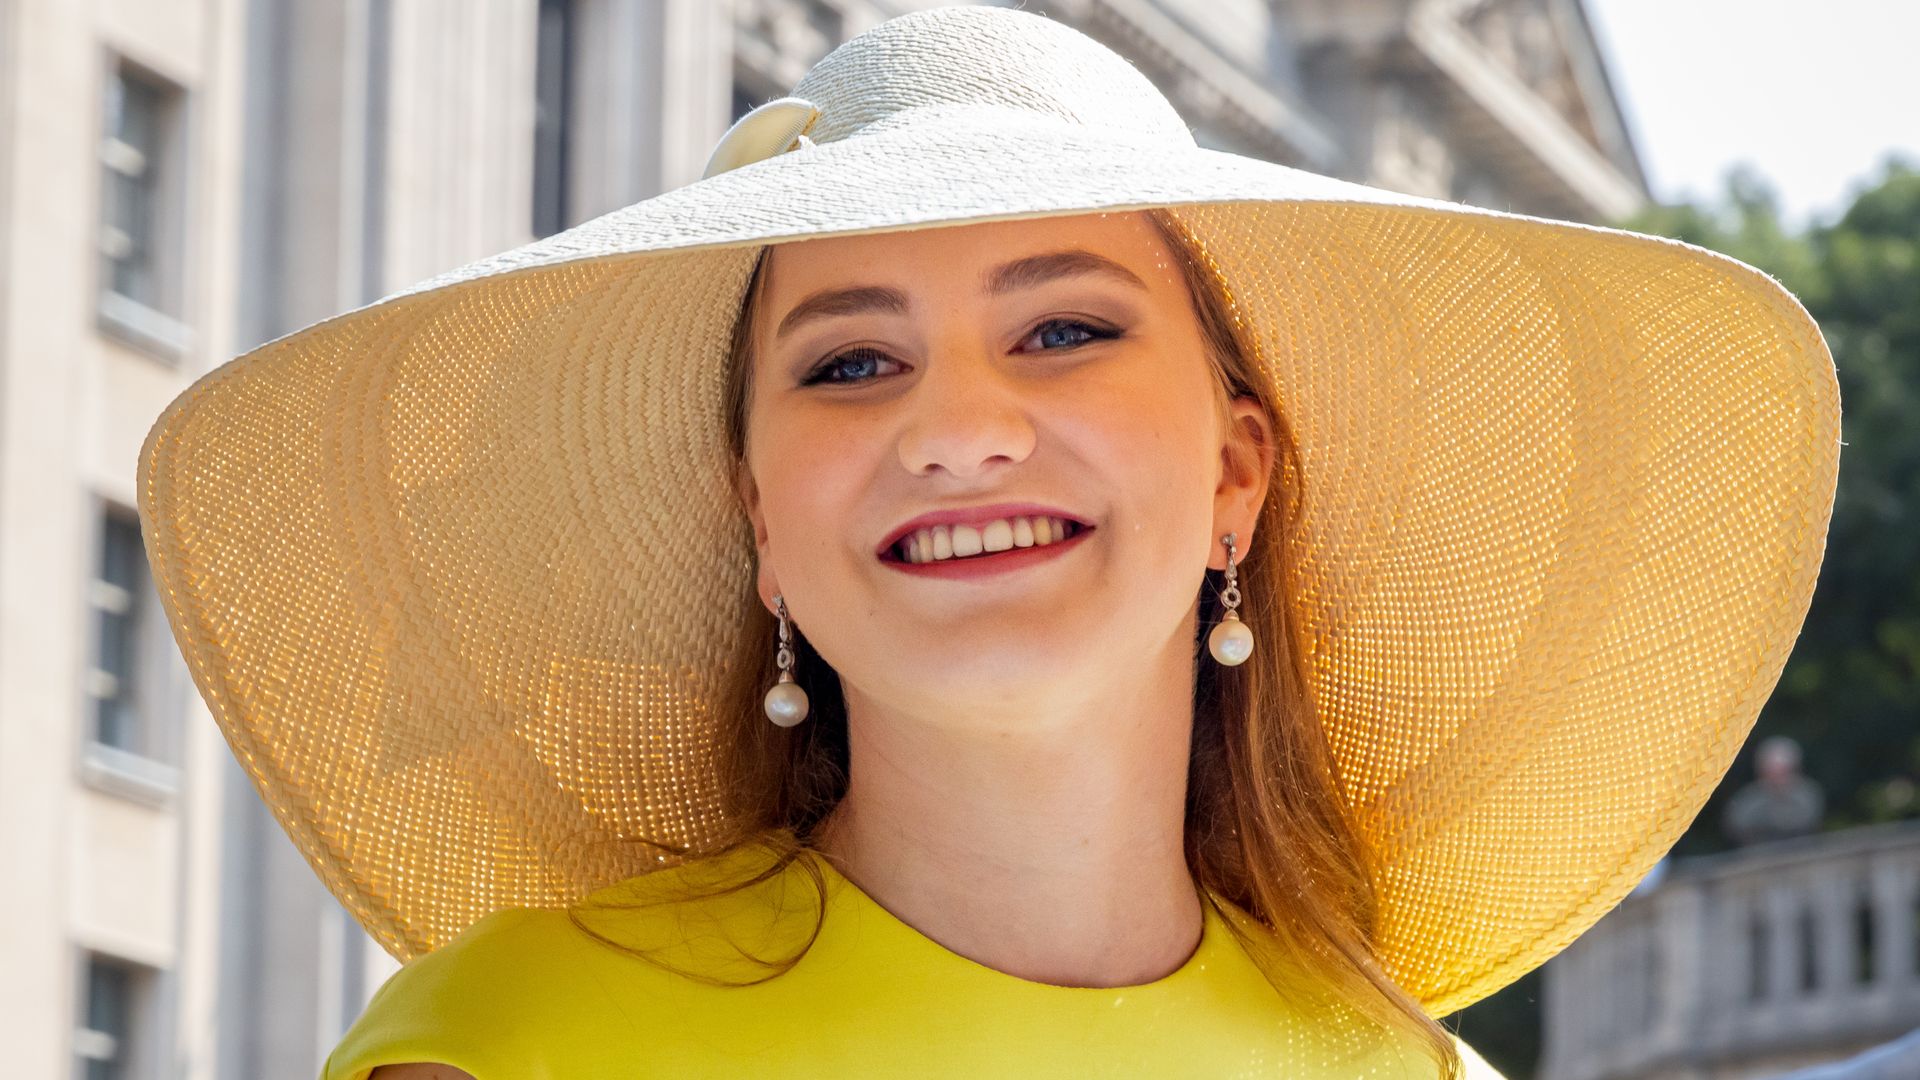 Princess Elisabeth wearing yellow dress and sun hat